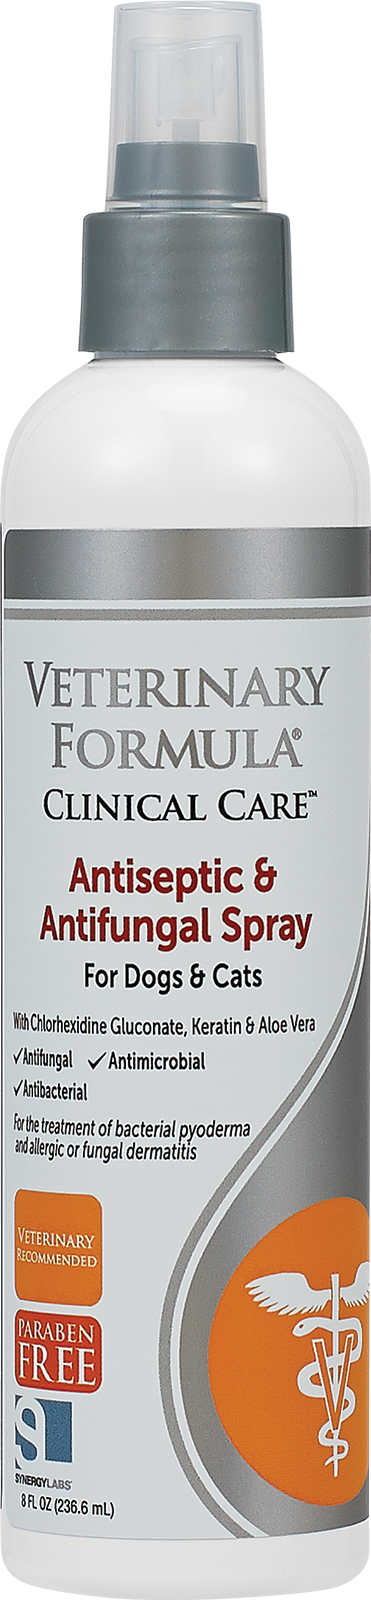 Veterinary Formula Clinical Care - Antiseptic & Antifungal Spray